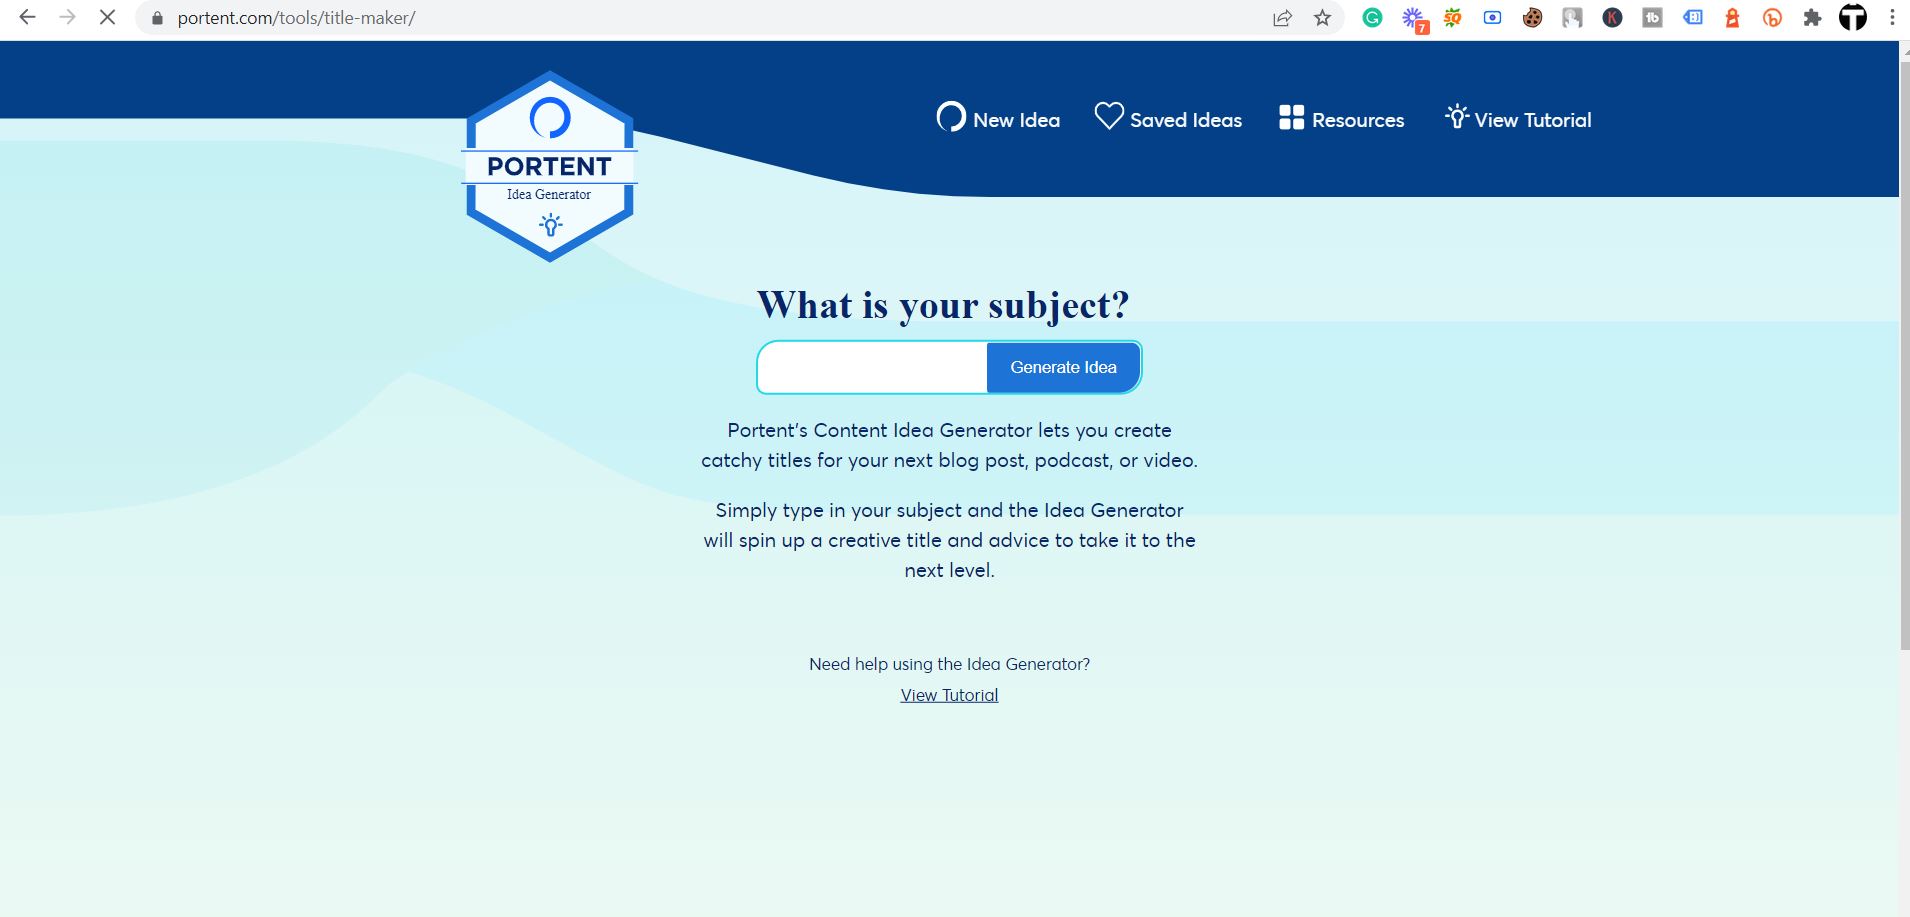 portent content idea generator tool for content creation